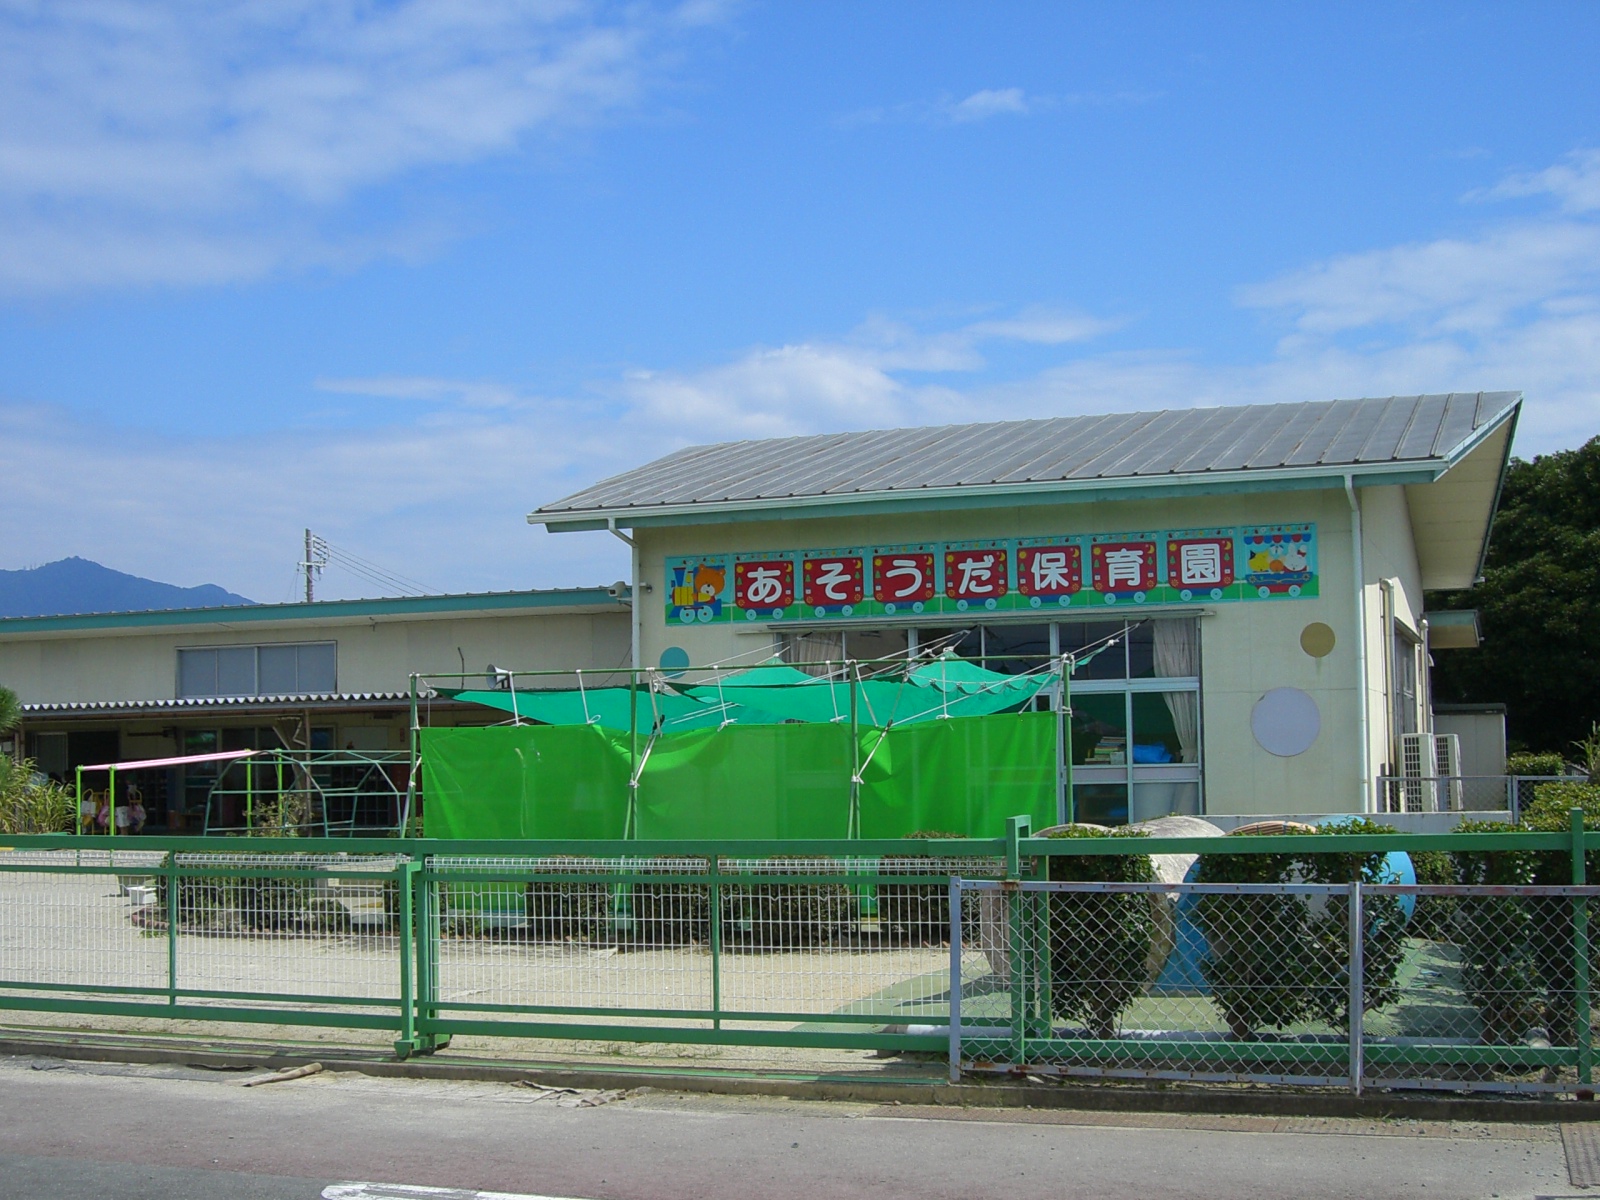 kindergarten ・ Nursery. Asoda nursery school (kindergarten ・ 585m to the nursery)